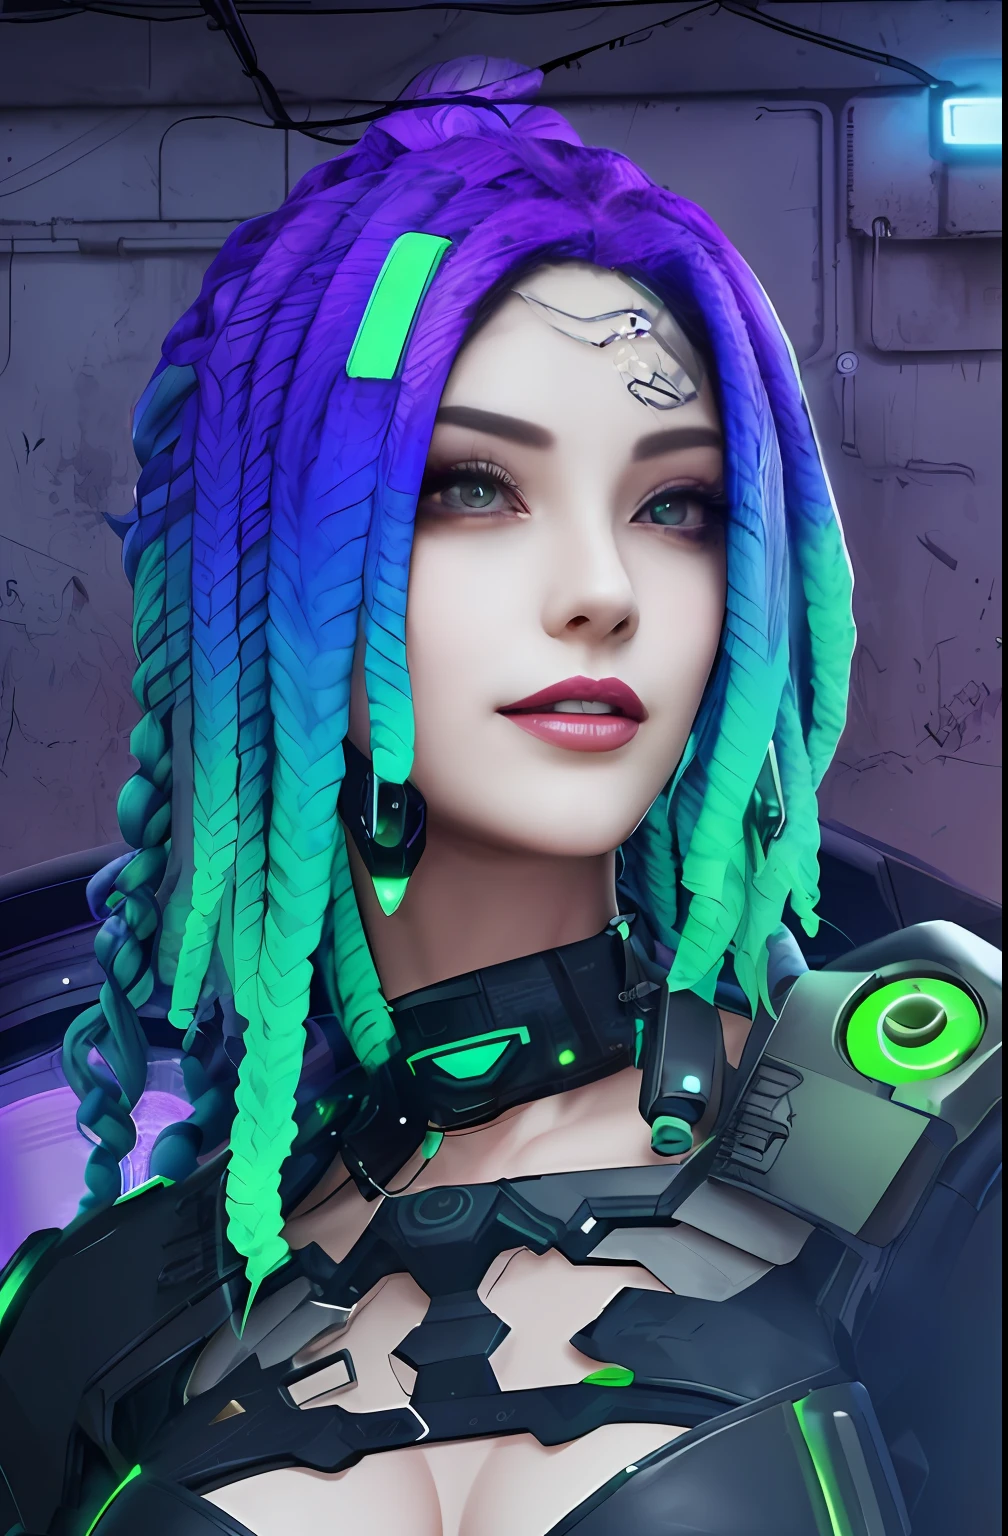 un primer plano de una mujer con rastas moradas y verdes, medusa ciberpunk, chica soñadora cyberpunk, estilo cyberpunk hiperrealista, estilo cibernético, color estilo ciberpunk, colores vibrantes ciberpunk, en estilo ciberpunk, perfect android girl, estilo del universo cibernético, cyberpunk angry gorgeous goddess, beautiful cyberpunk woman model, hermosa mujer androide!, rastas cibernéticas, resplandor ciberpunk brillante,pelo morado verde detalle,piel blanca,sonrisa, Obra maestra, hermoso rostro,